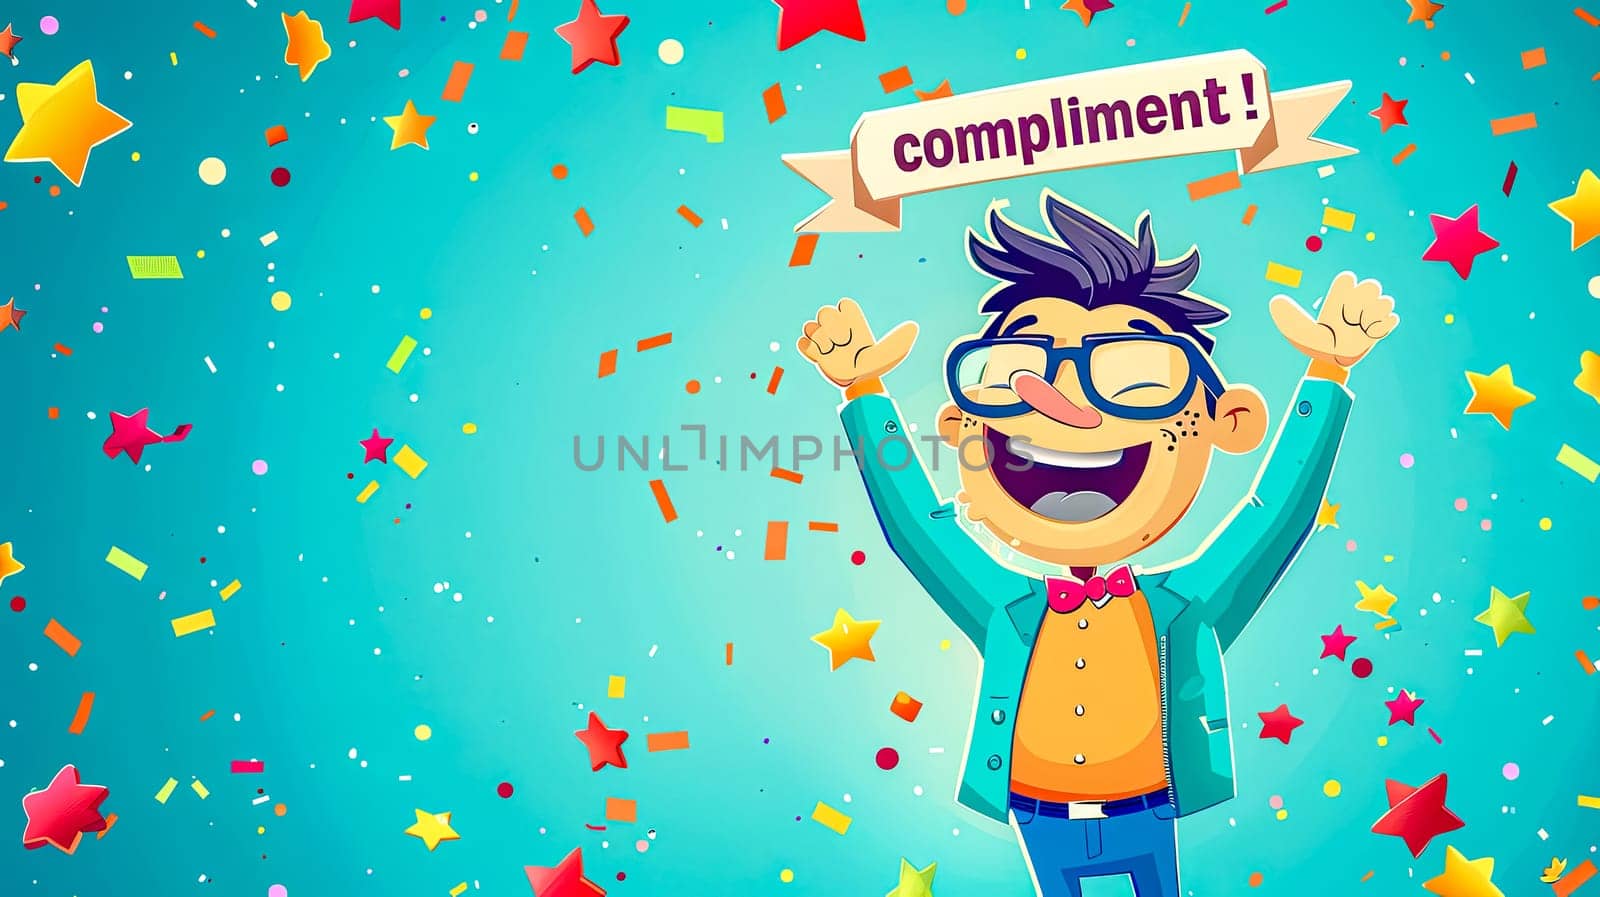 Joyful cartoon character celebrating with confetti by Edophoto